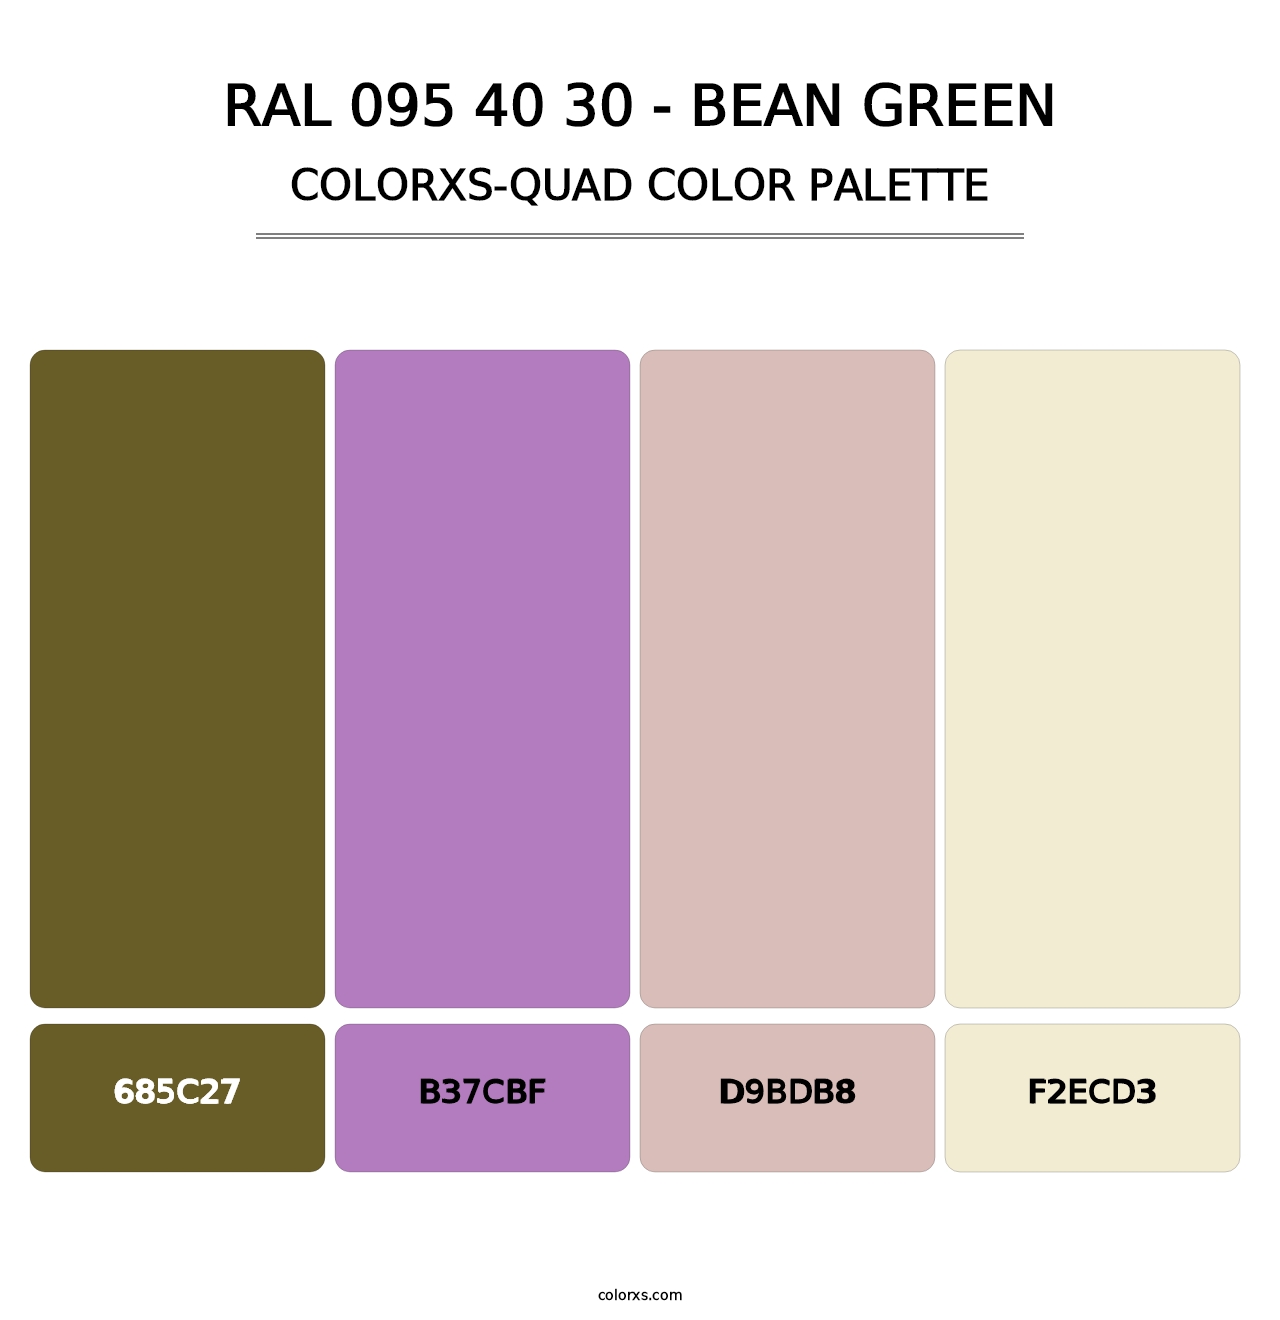 RAL 095 40 30 - Bean Green - Colorxs Quad Palette